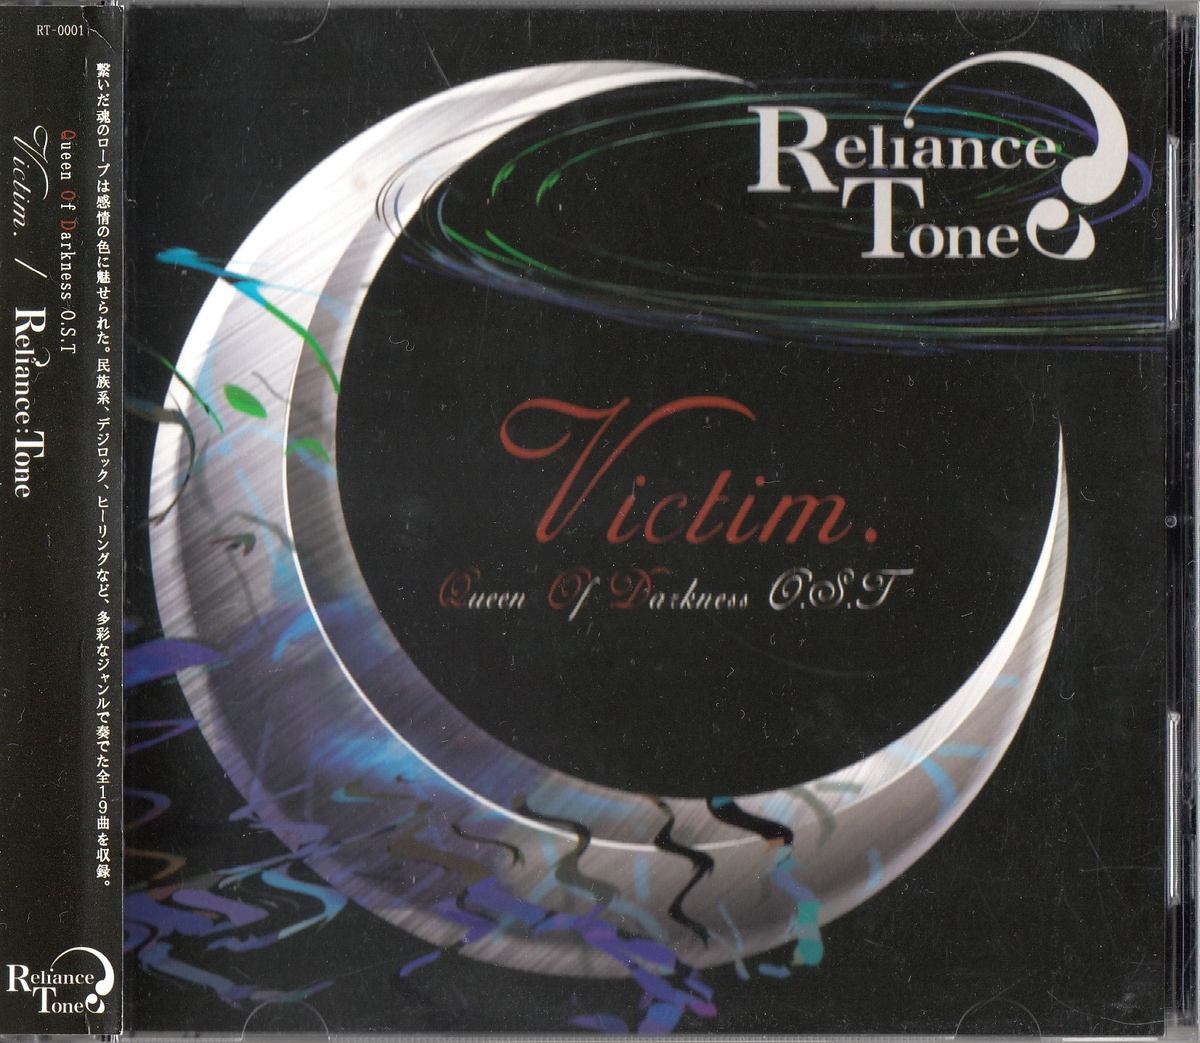 ★Queen of Darkness O.S.T Victim./Reliance:Tone,流歌,葉山りく,サウンドトラック,OST,同人音楽_画像1